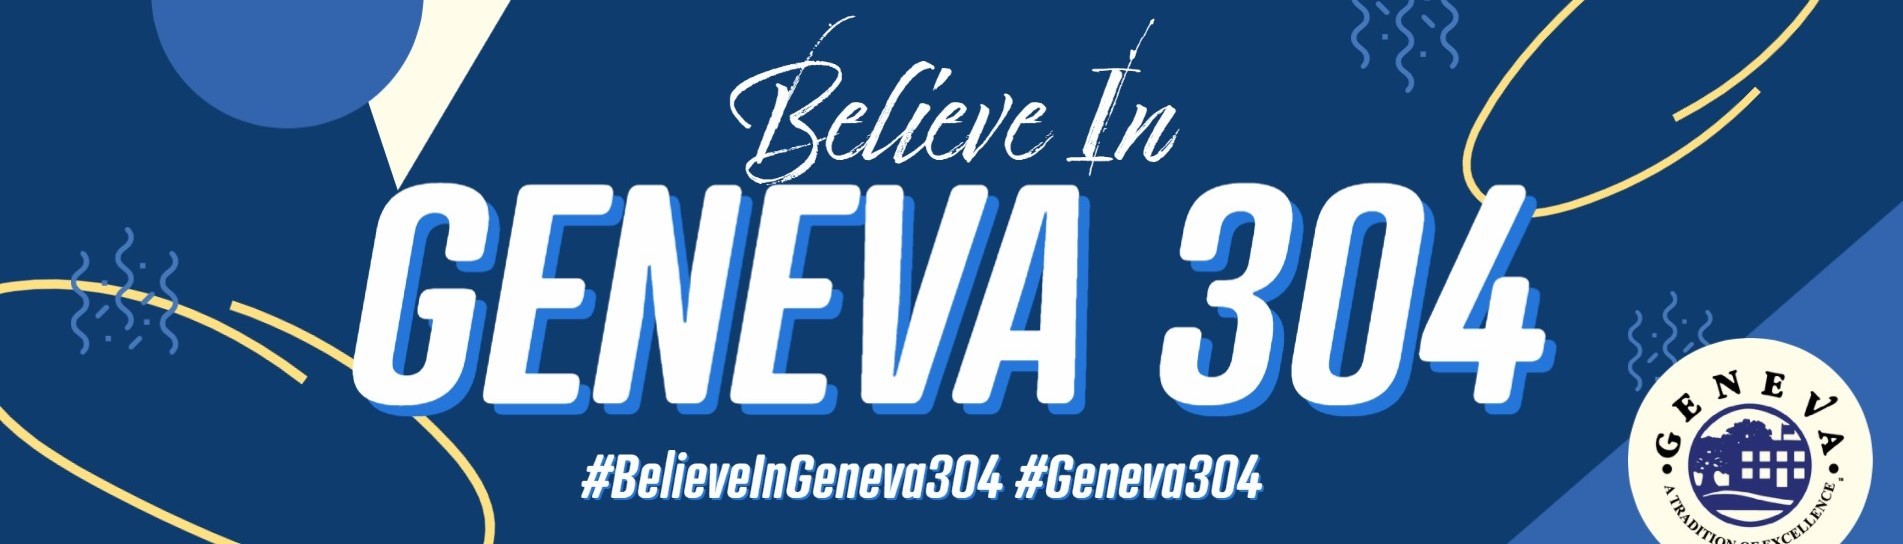 believe in geneva